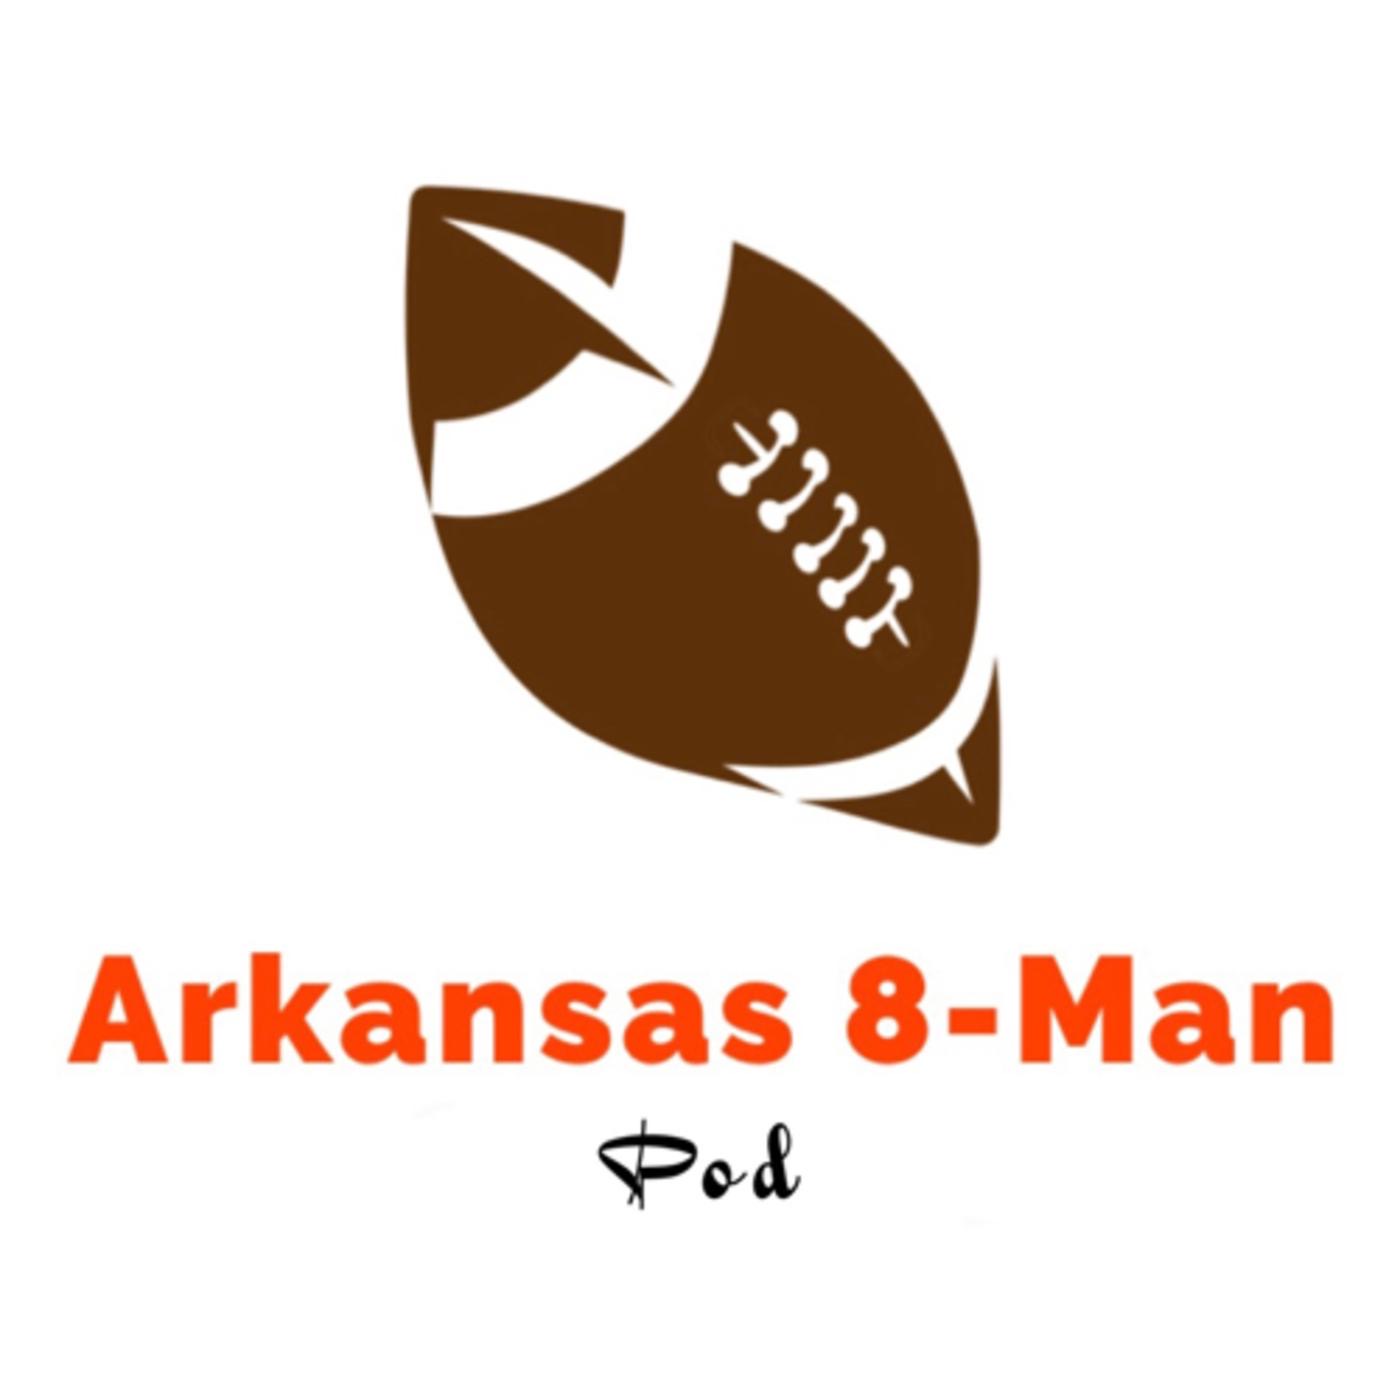 Arkansas 8-Man Pod Episode 9